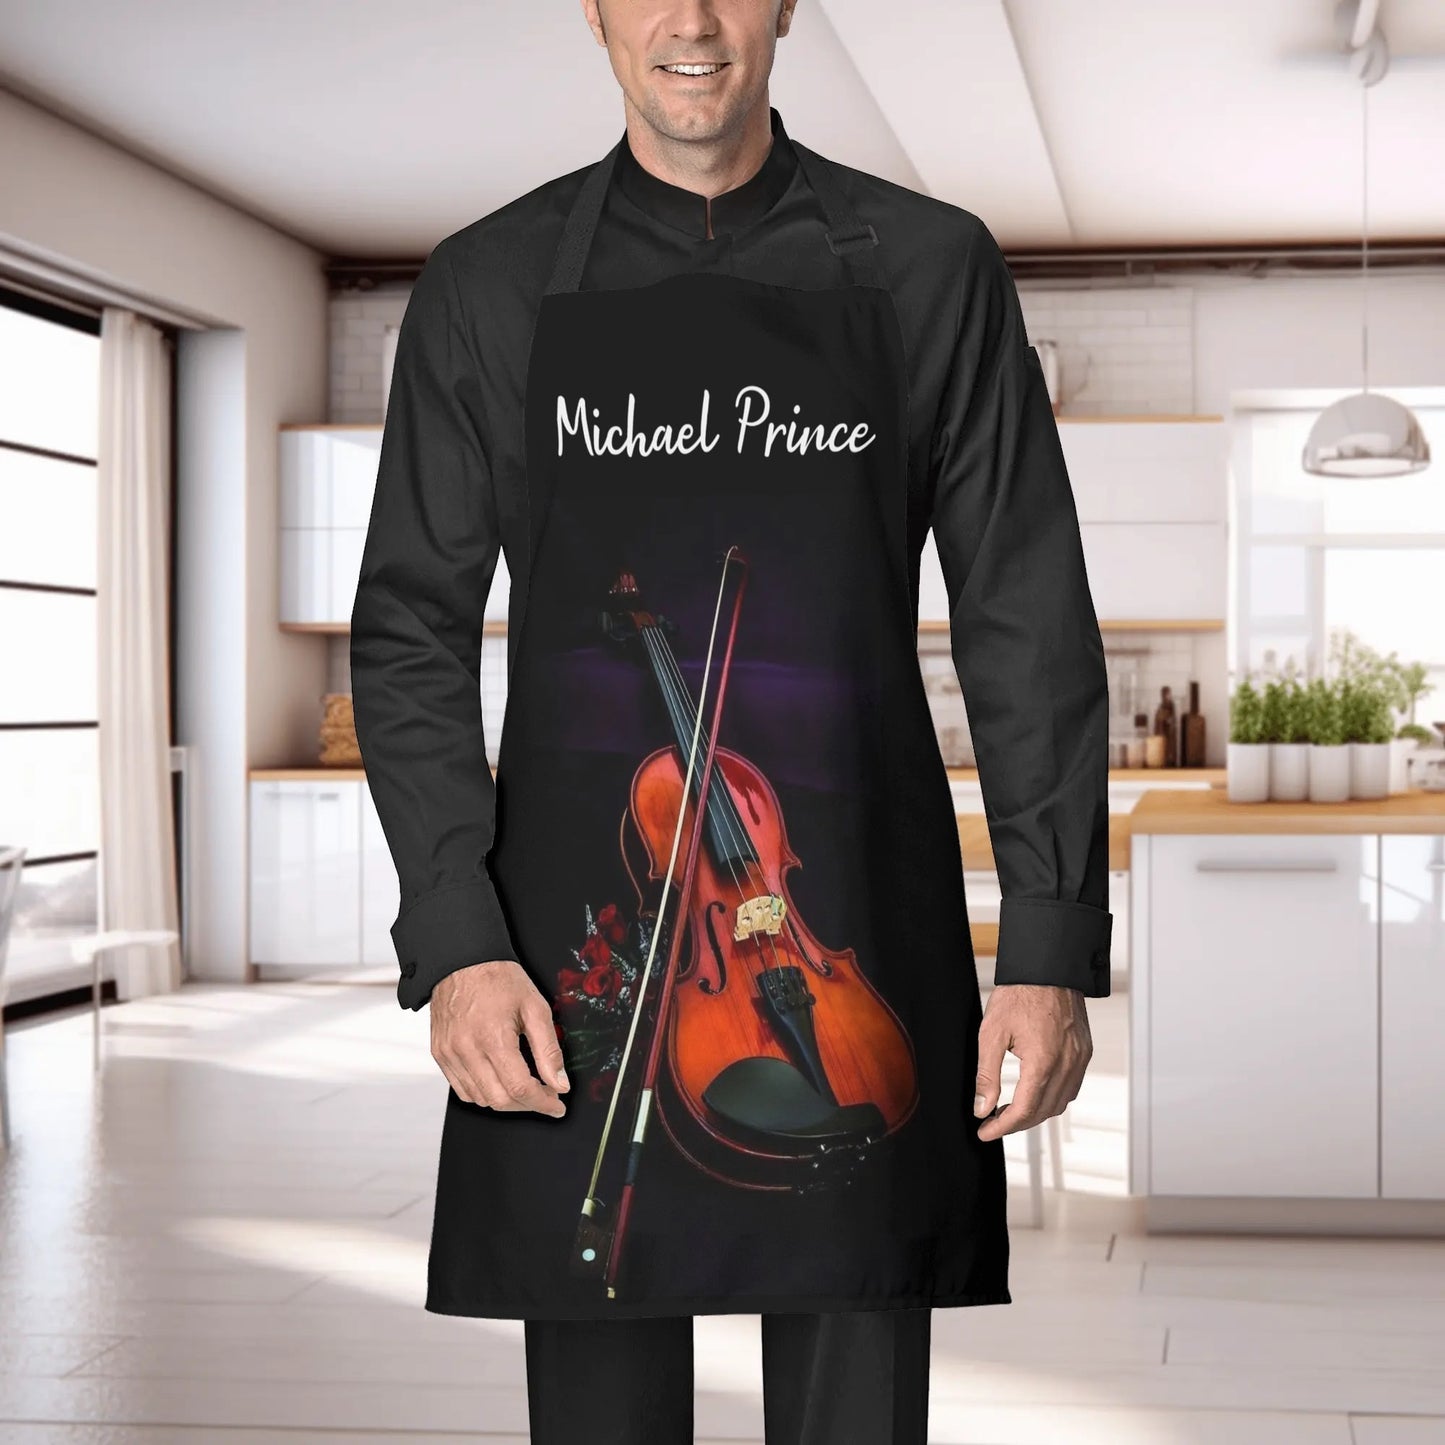 Michael Prince Violin Apron